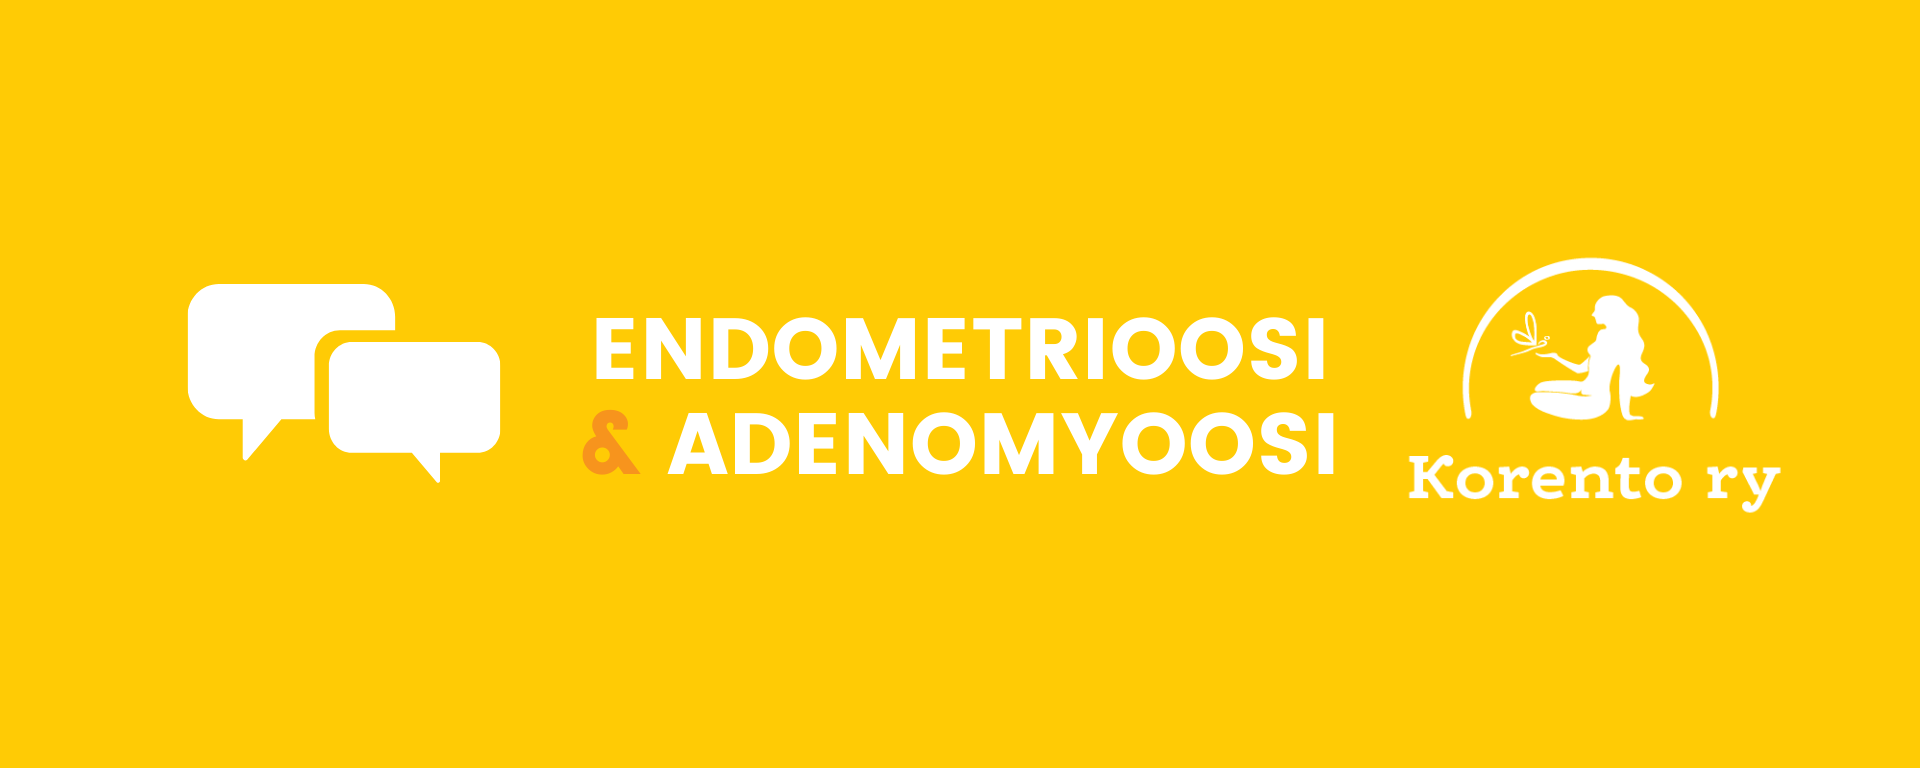 Endometrioosi ja adenomyoosi chat